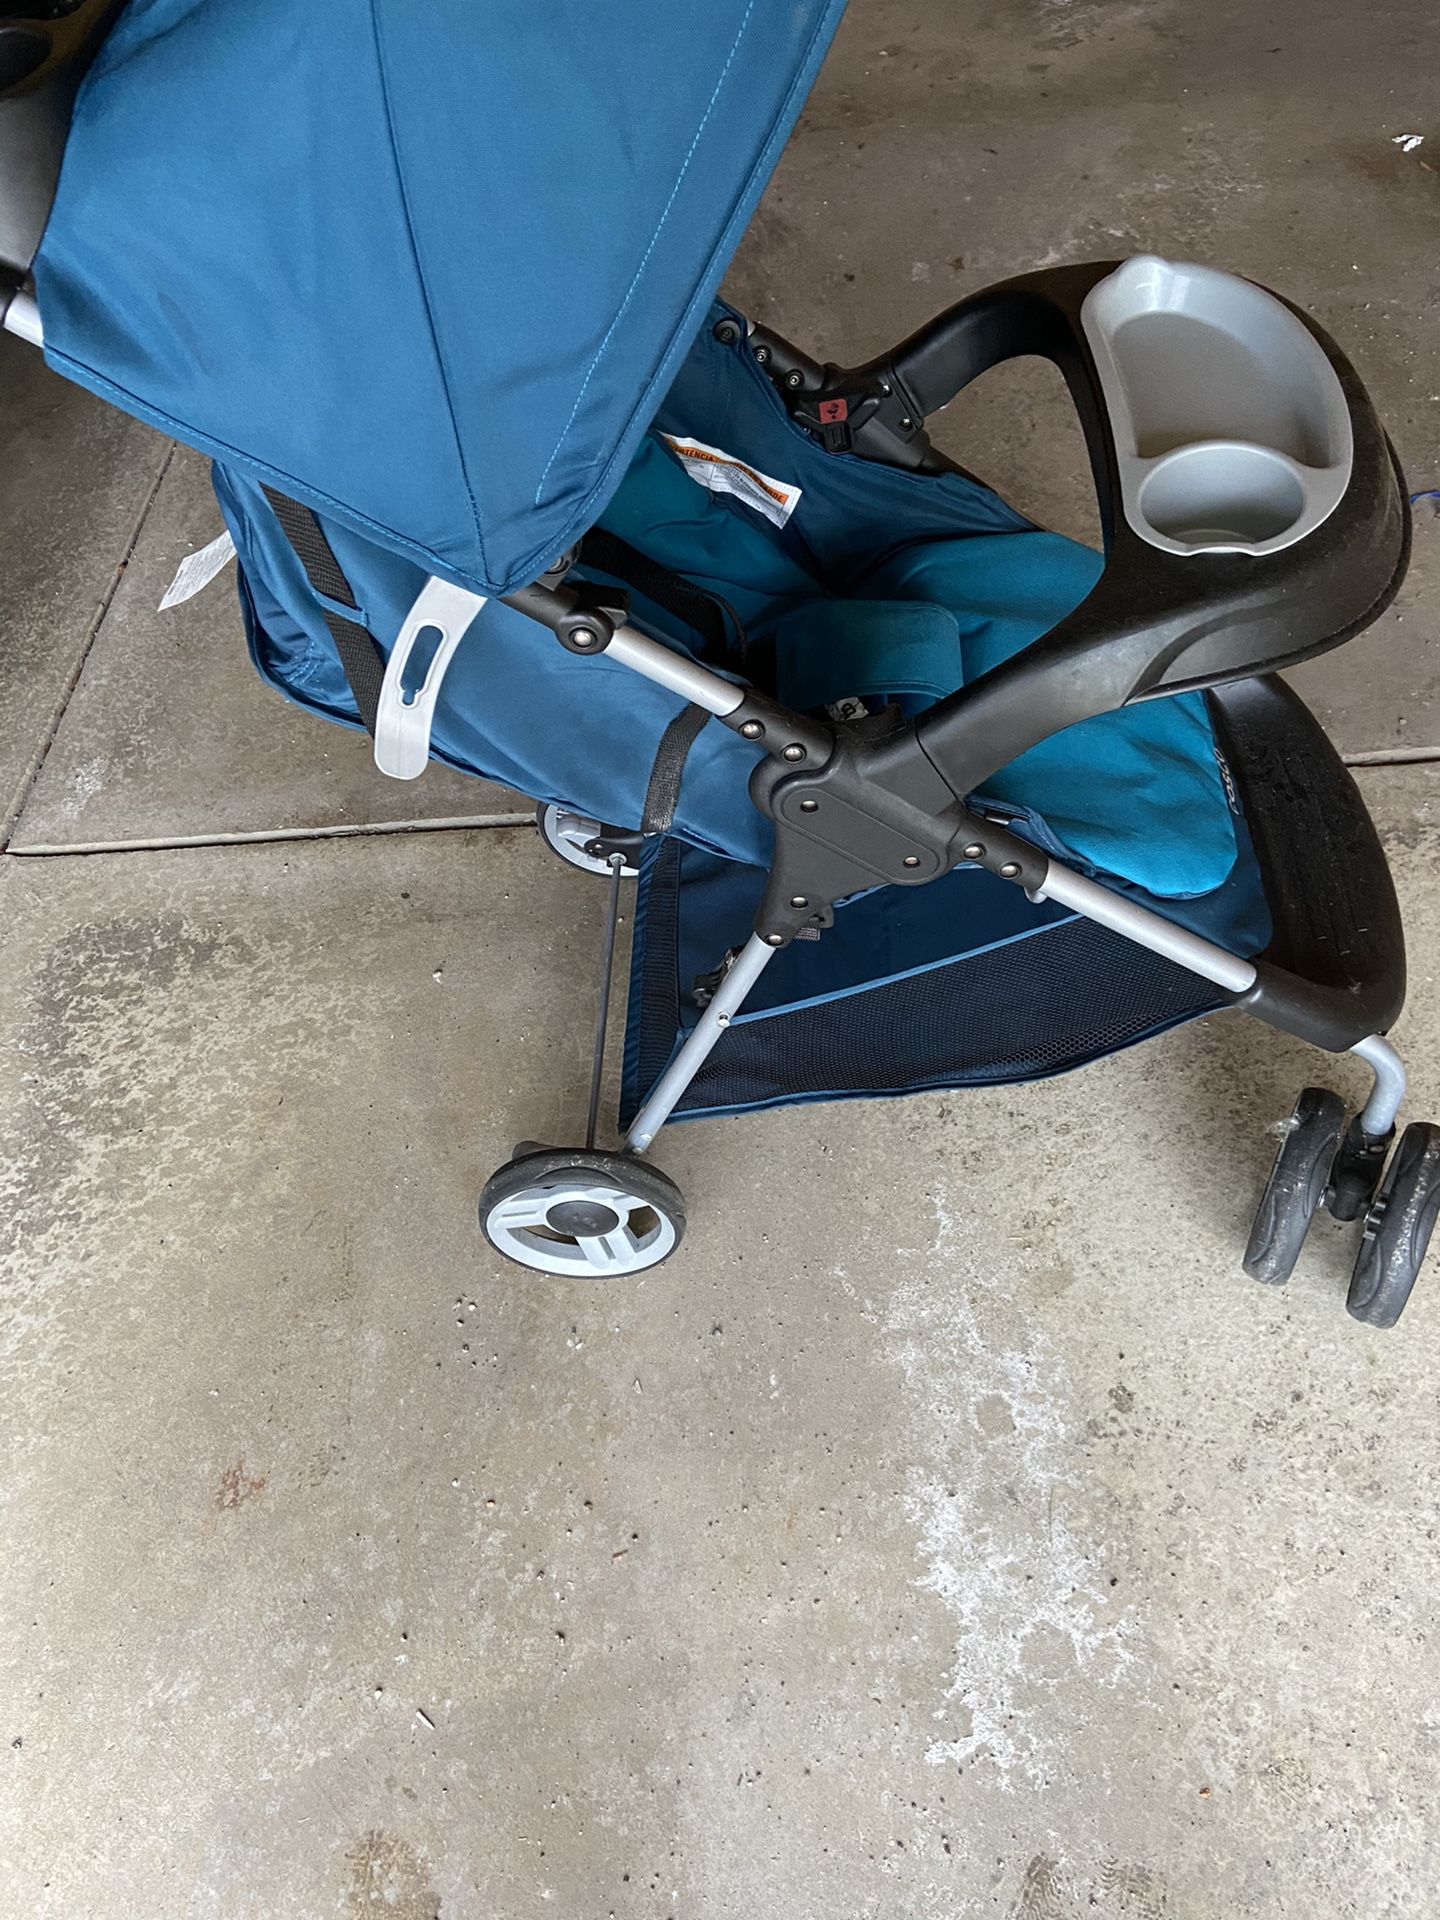 Cosco baby stroller